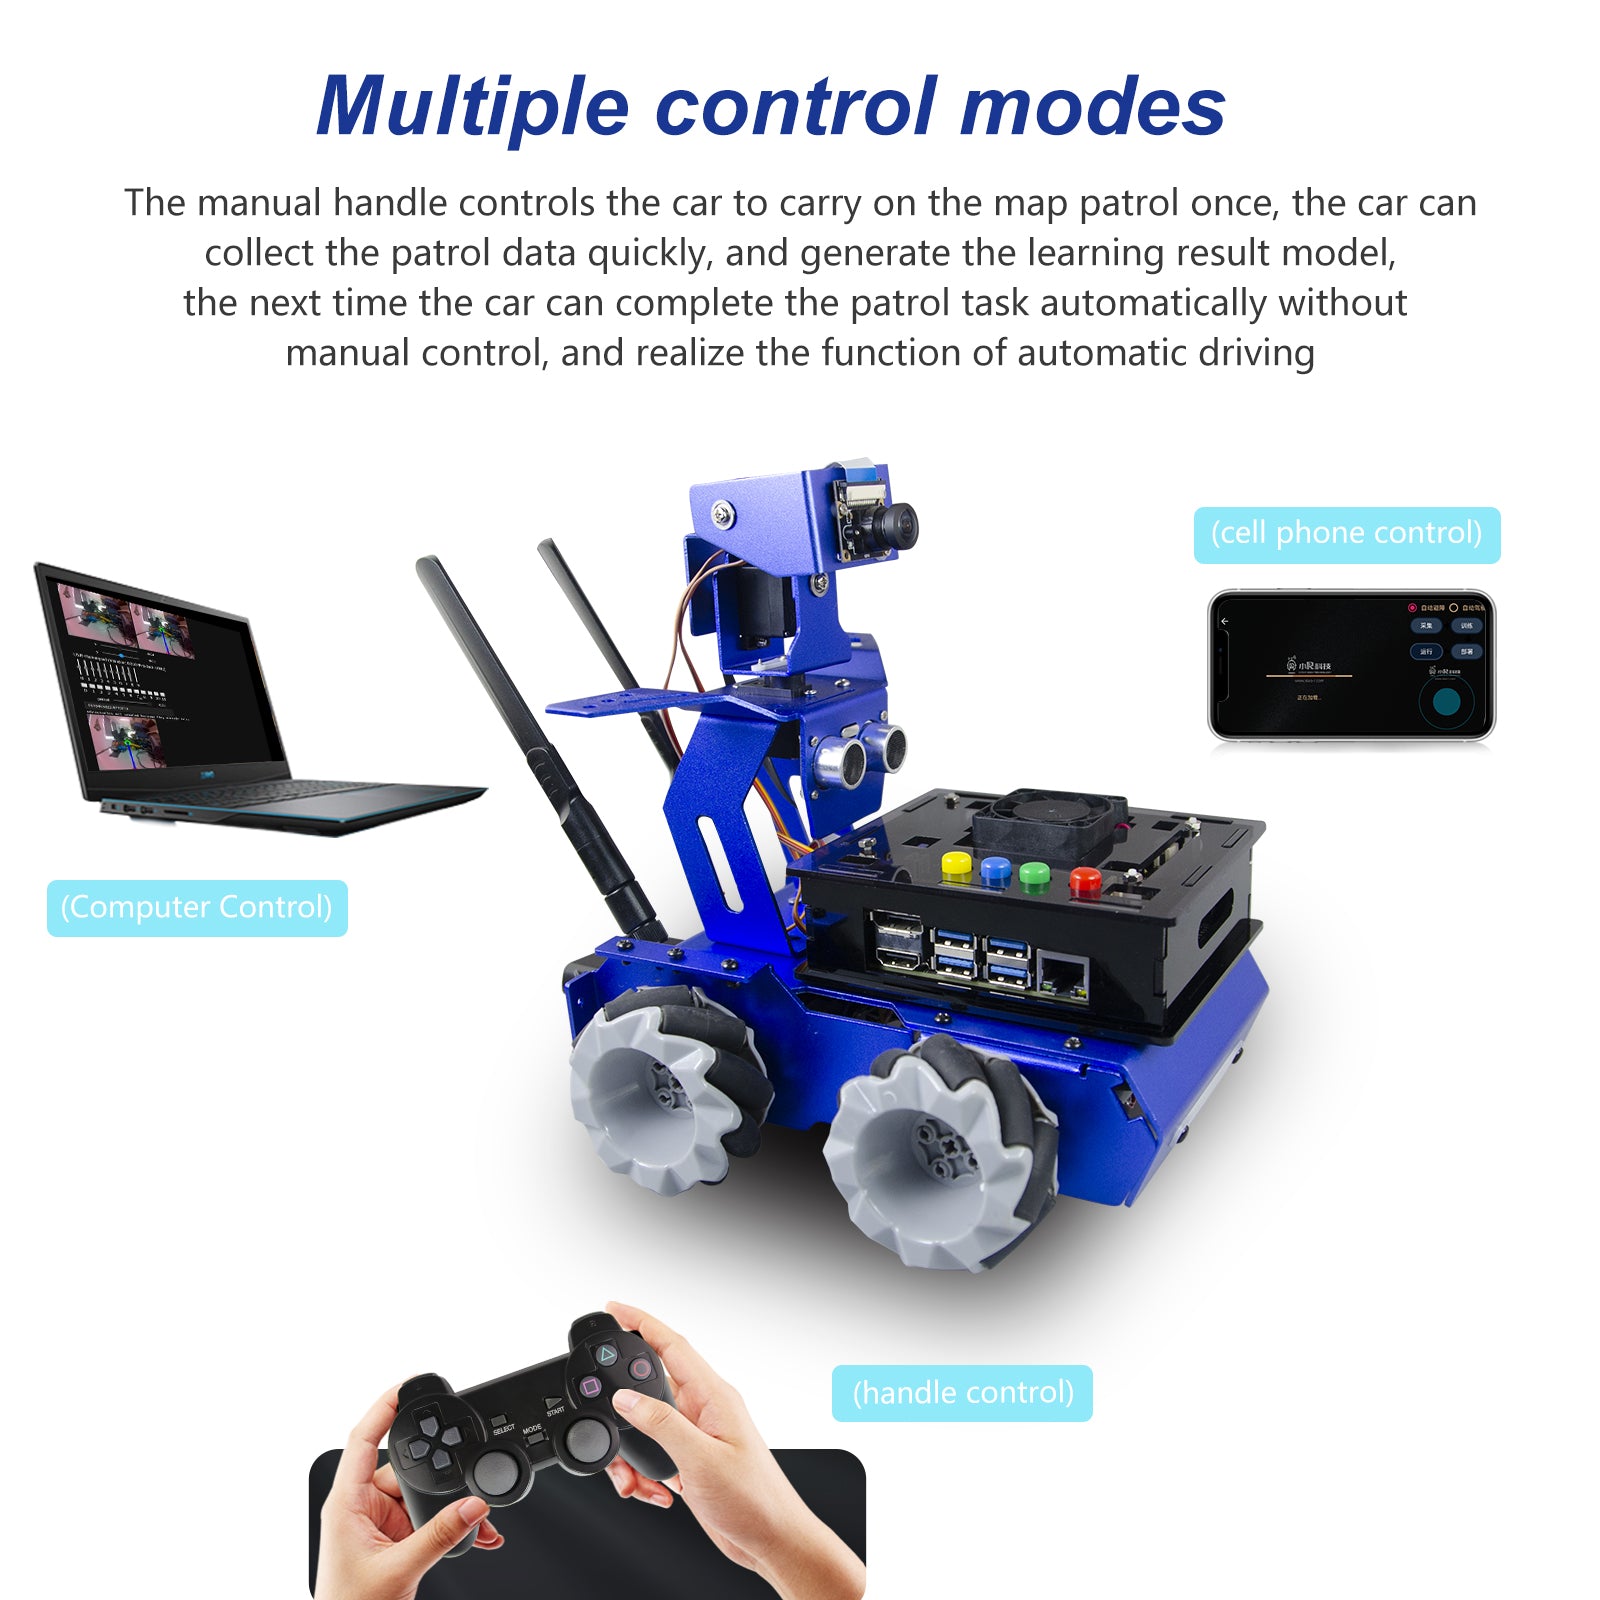 XiaorR Geek Jetson Nano Jetbot 2.0 wireless Mecanum wheeled smart robot car support multiple control modes